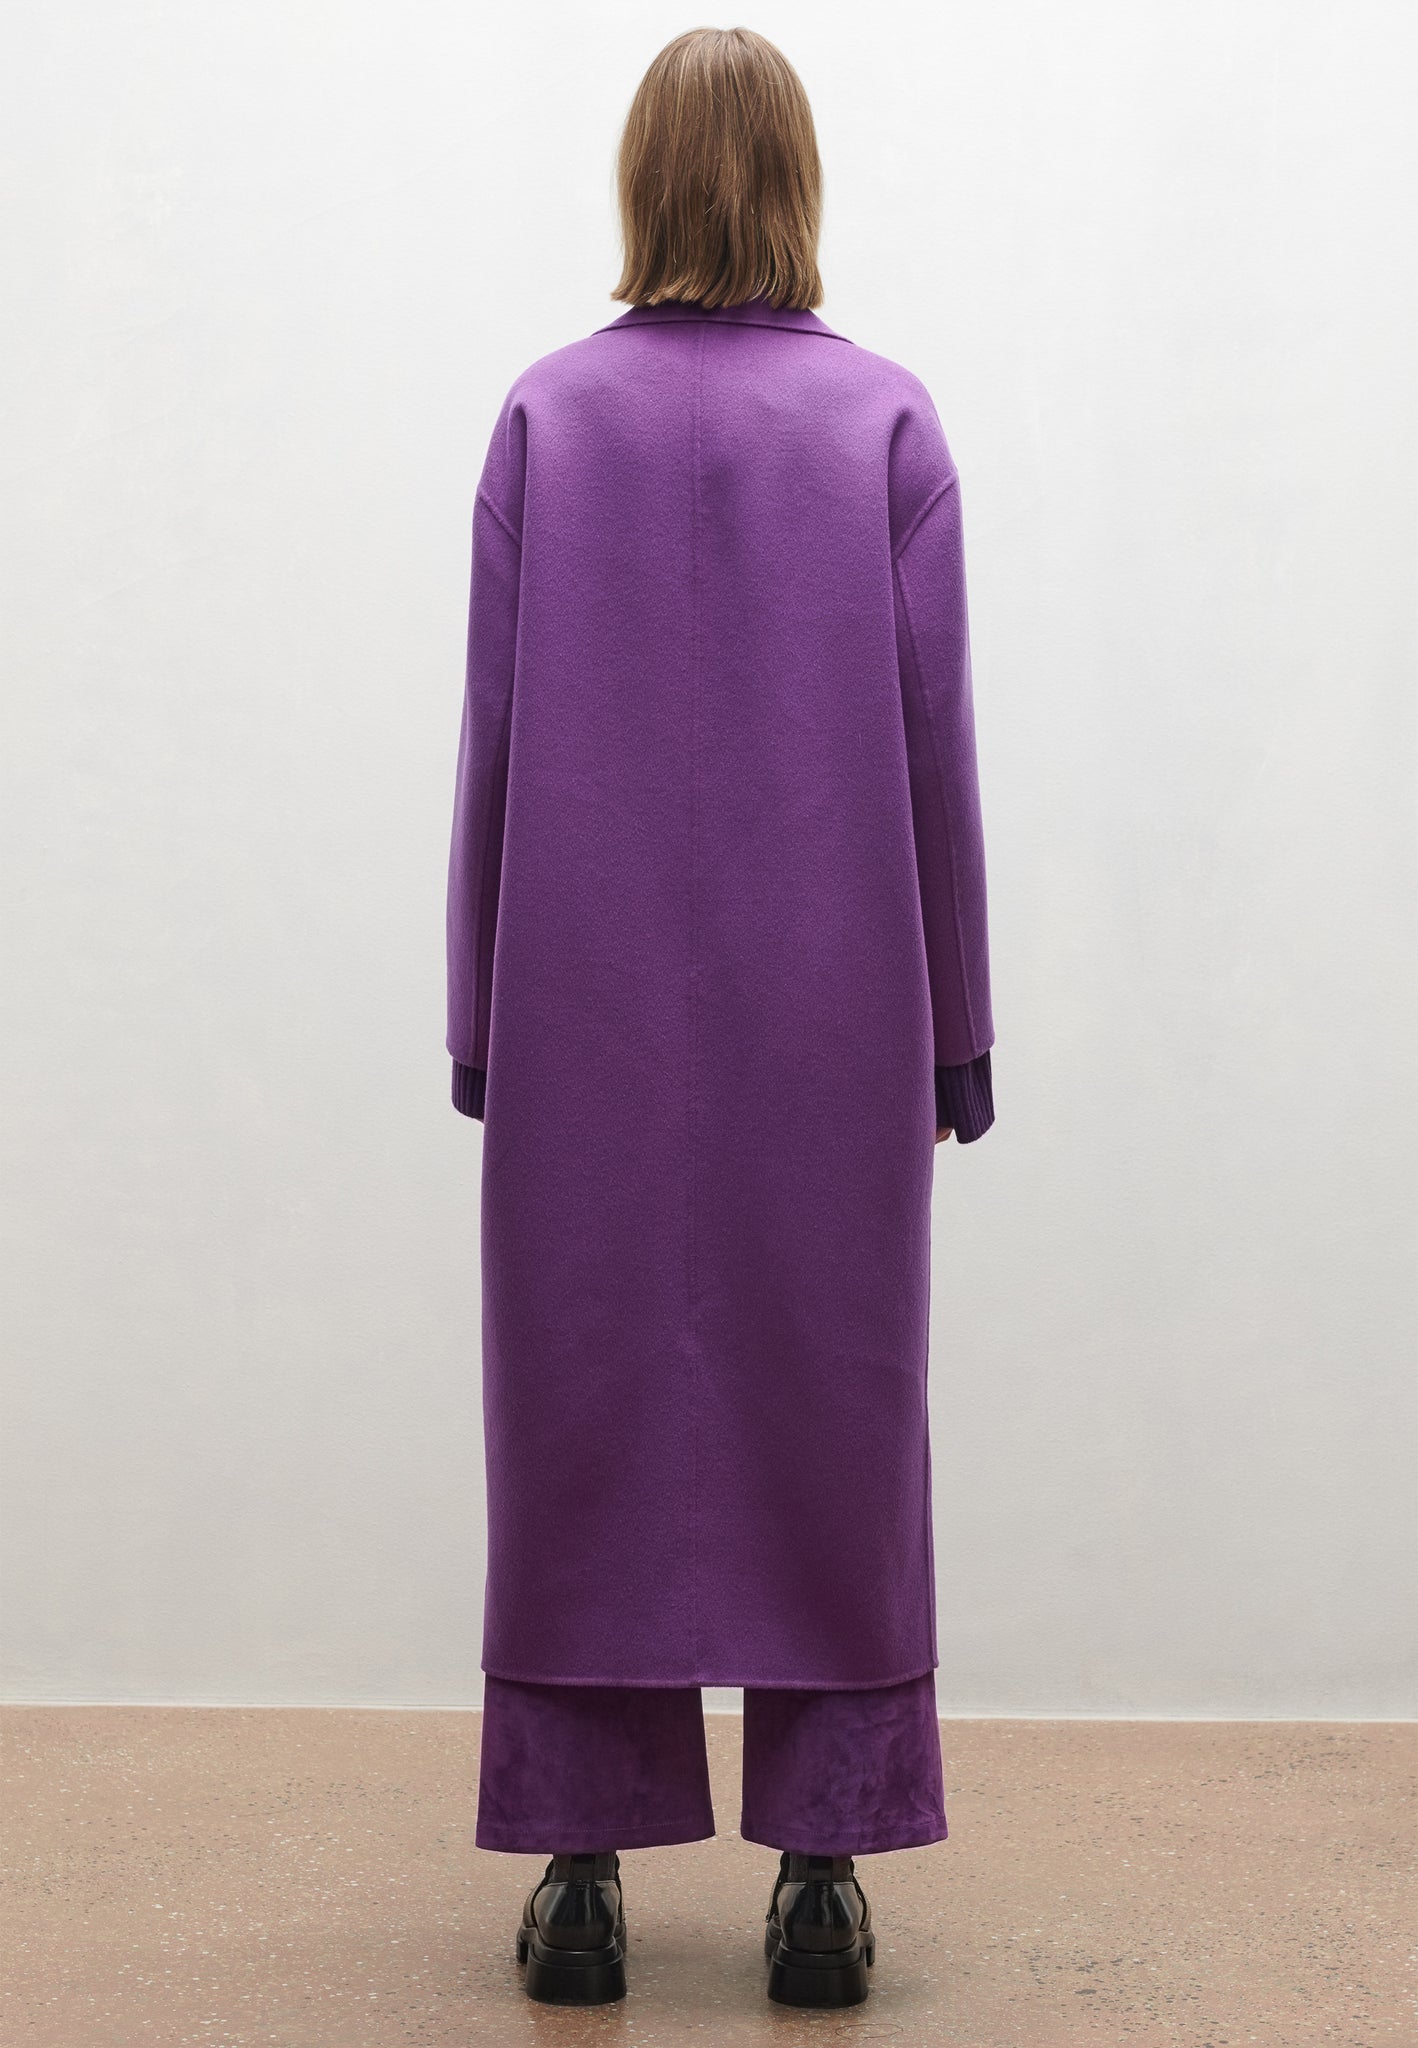 MARAL | Wool coat